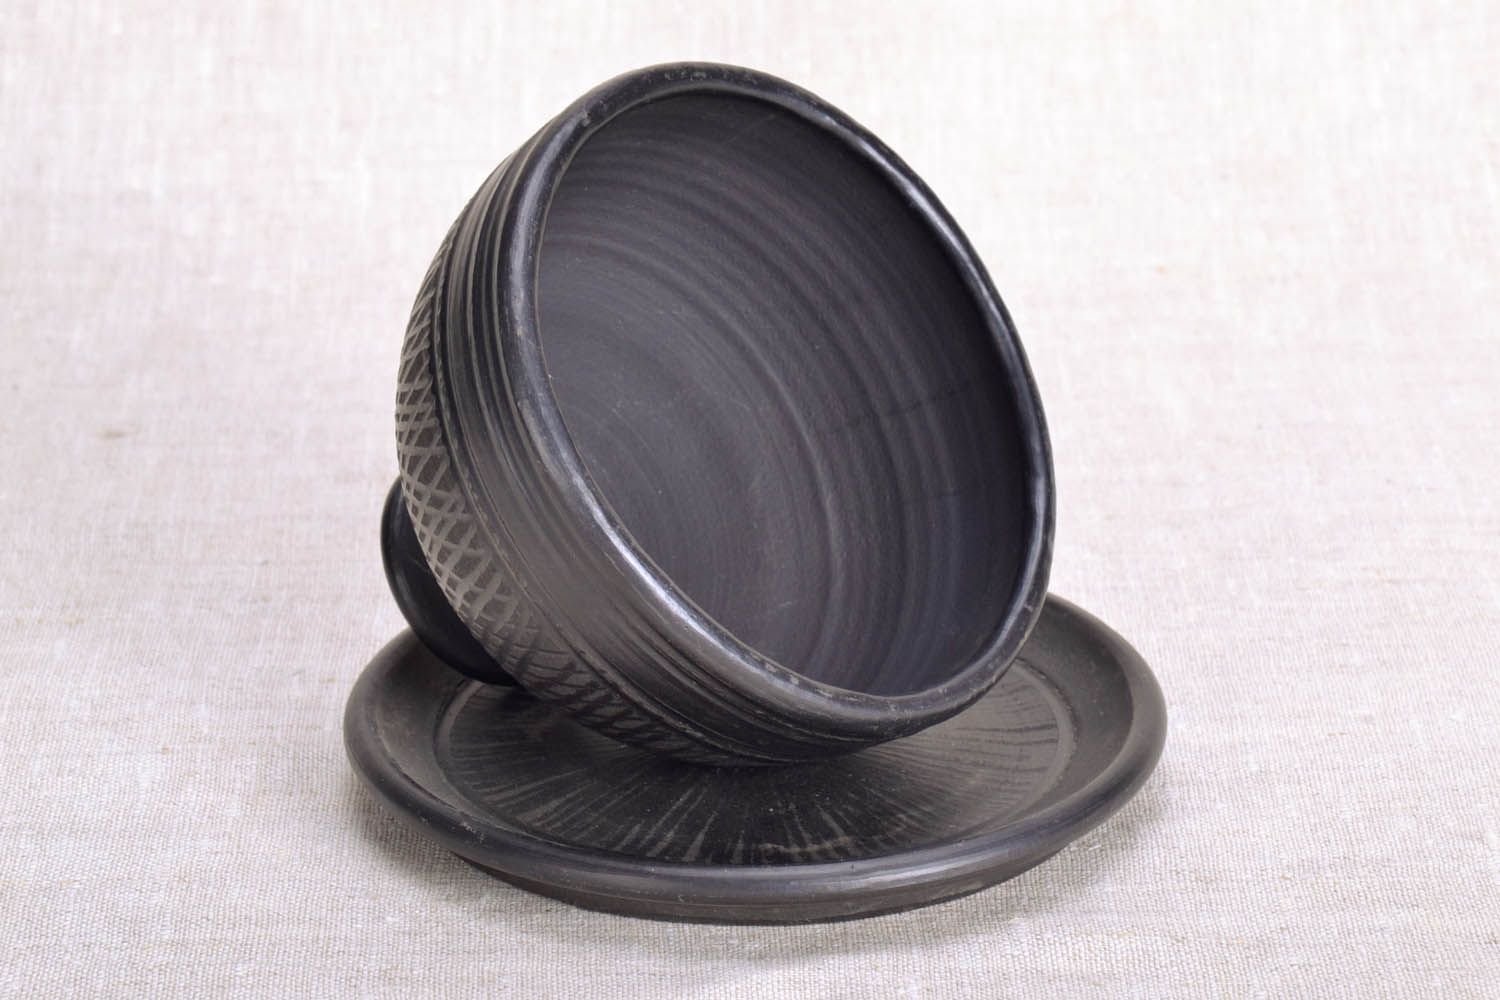 Butter plate made of black smoke ceramics photo 3